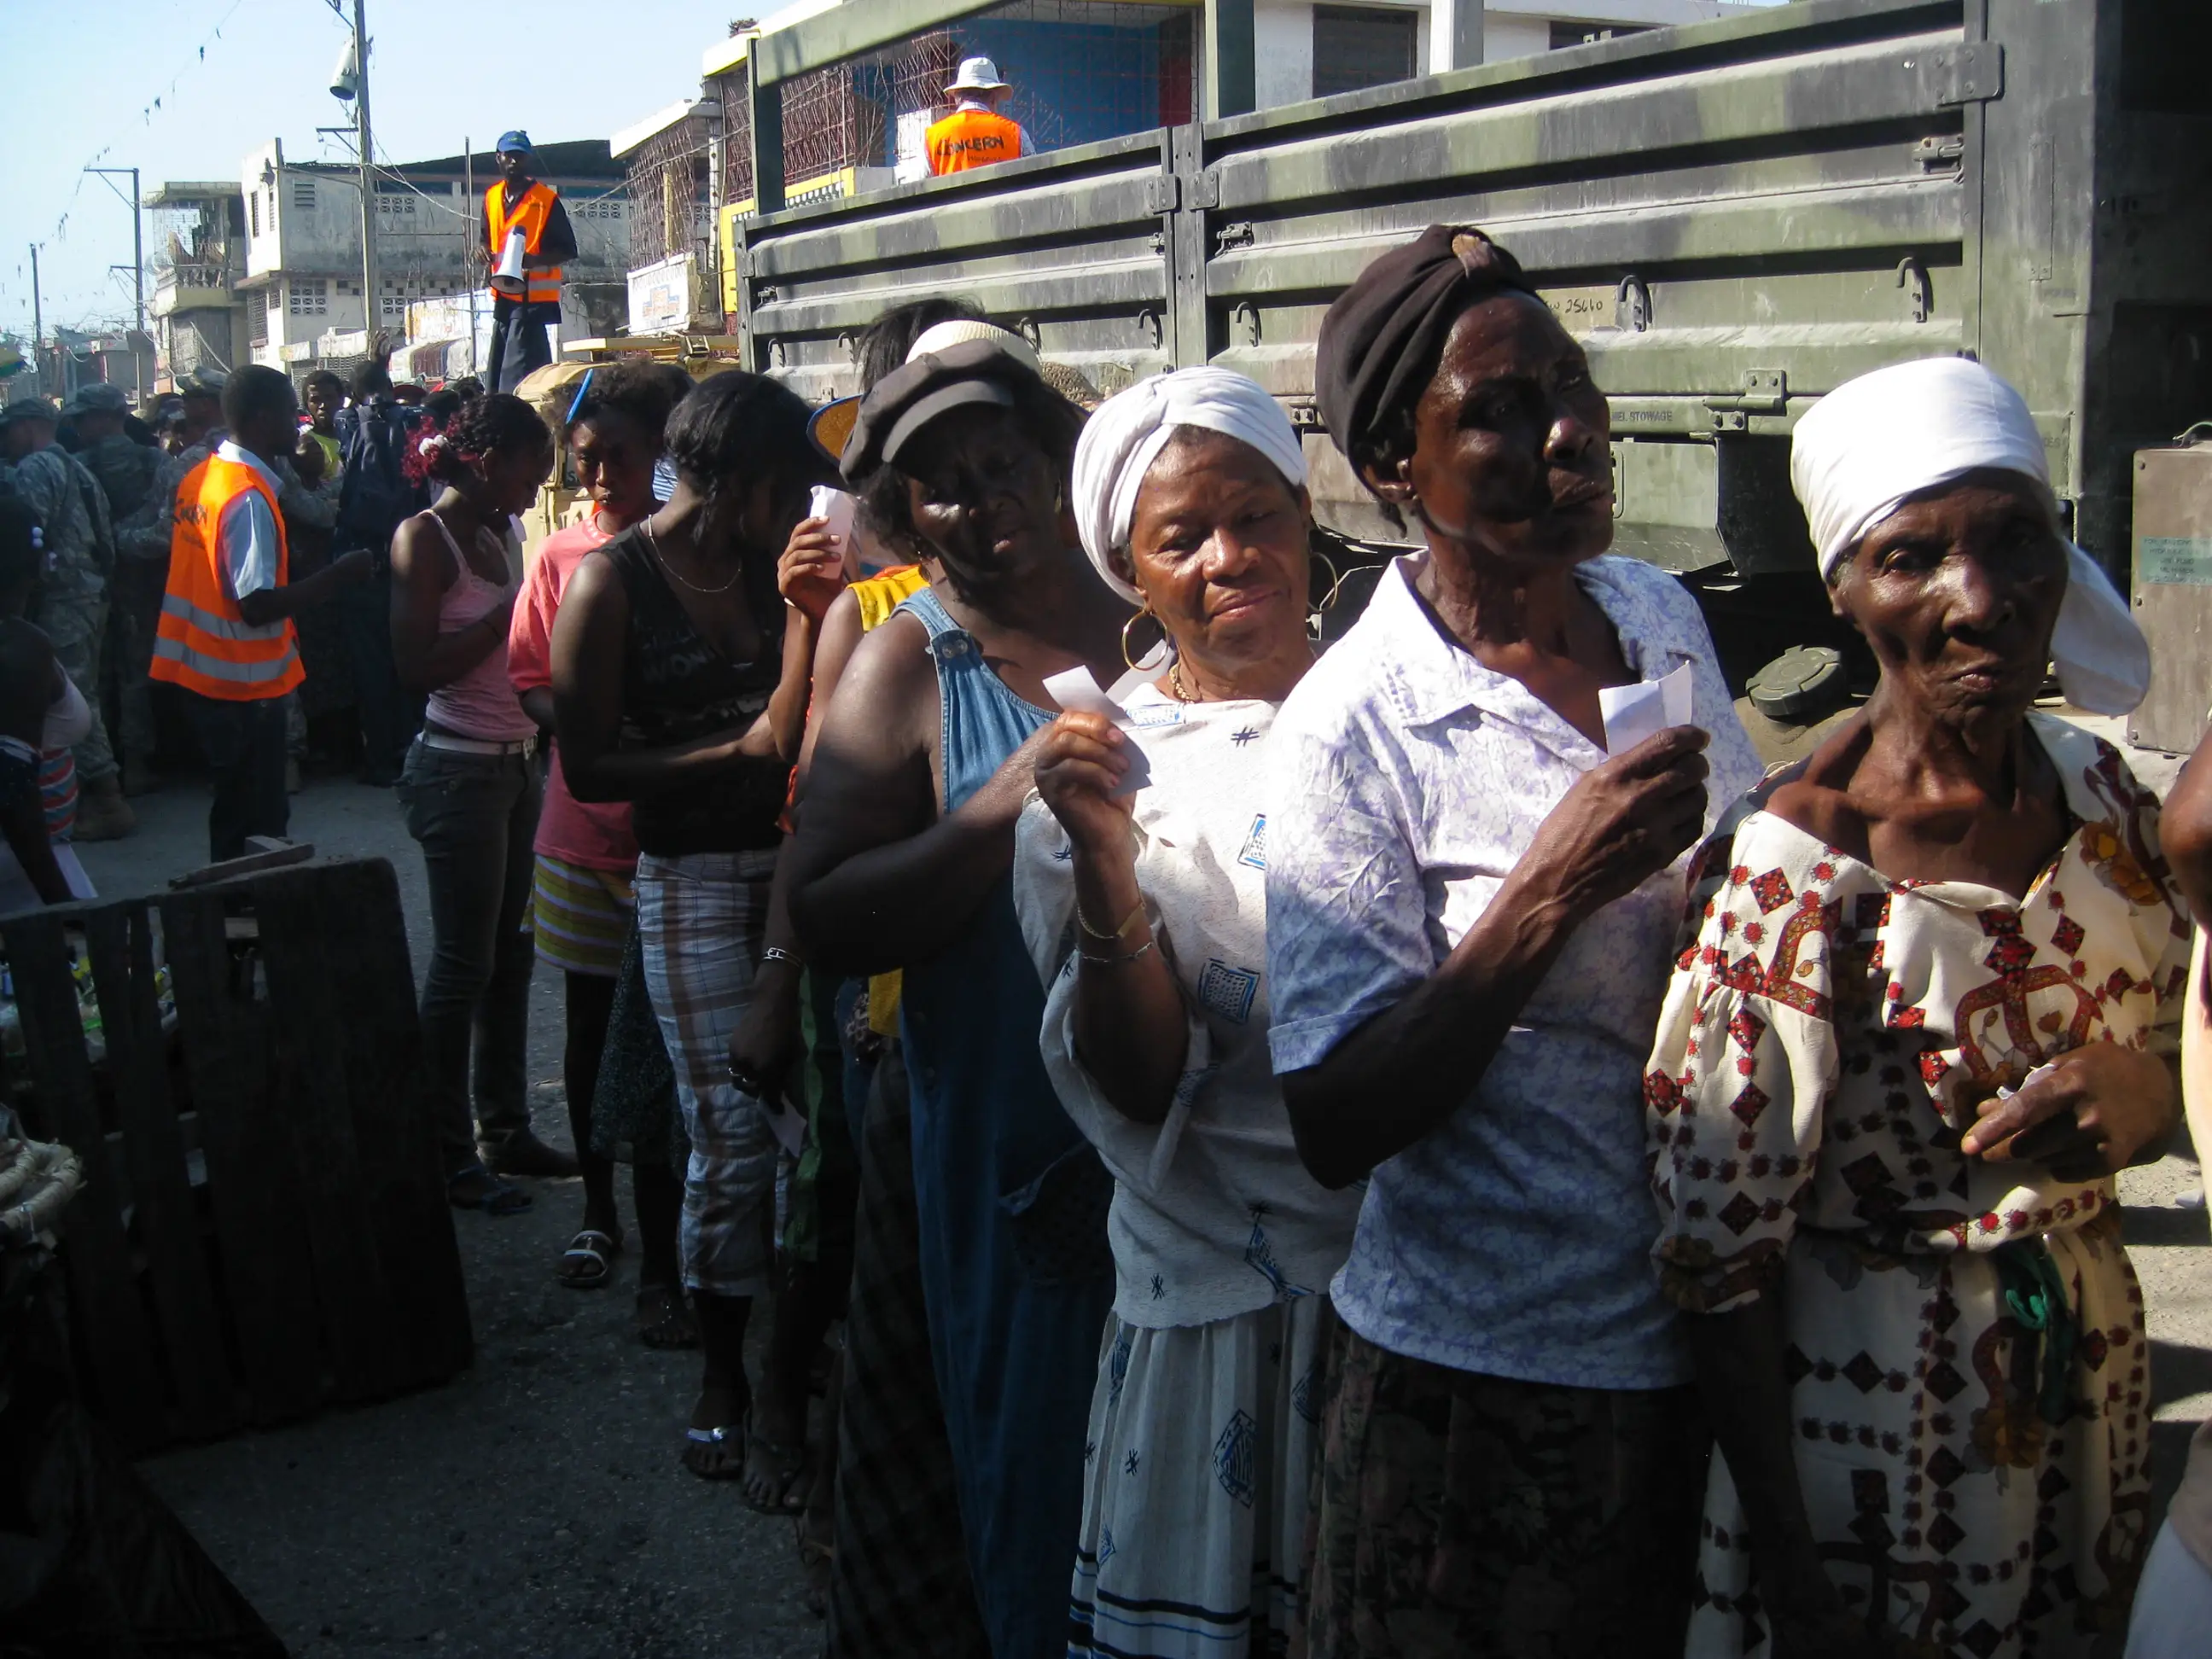 Saint Martin community, Port au Prince, February 2010